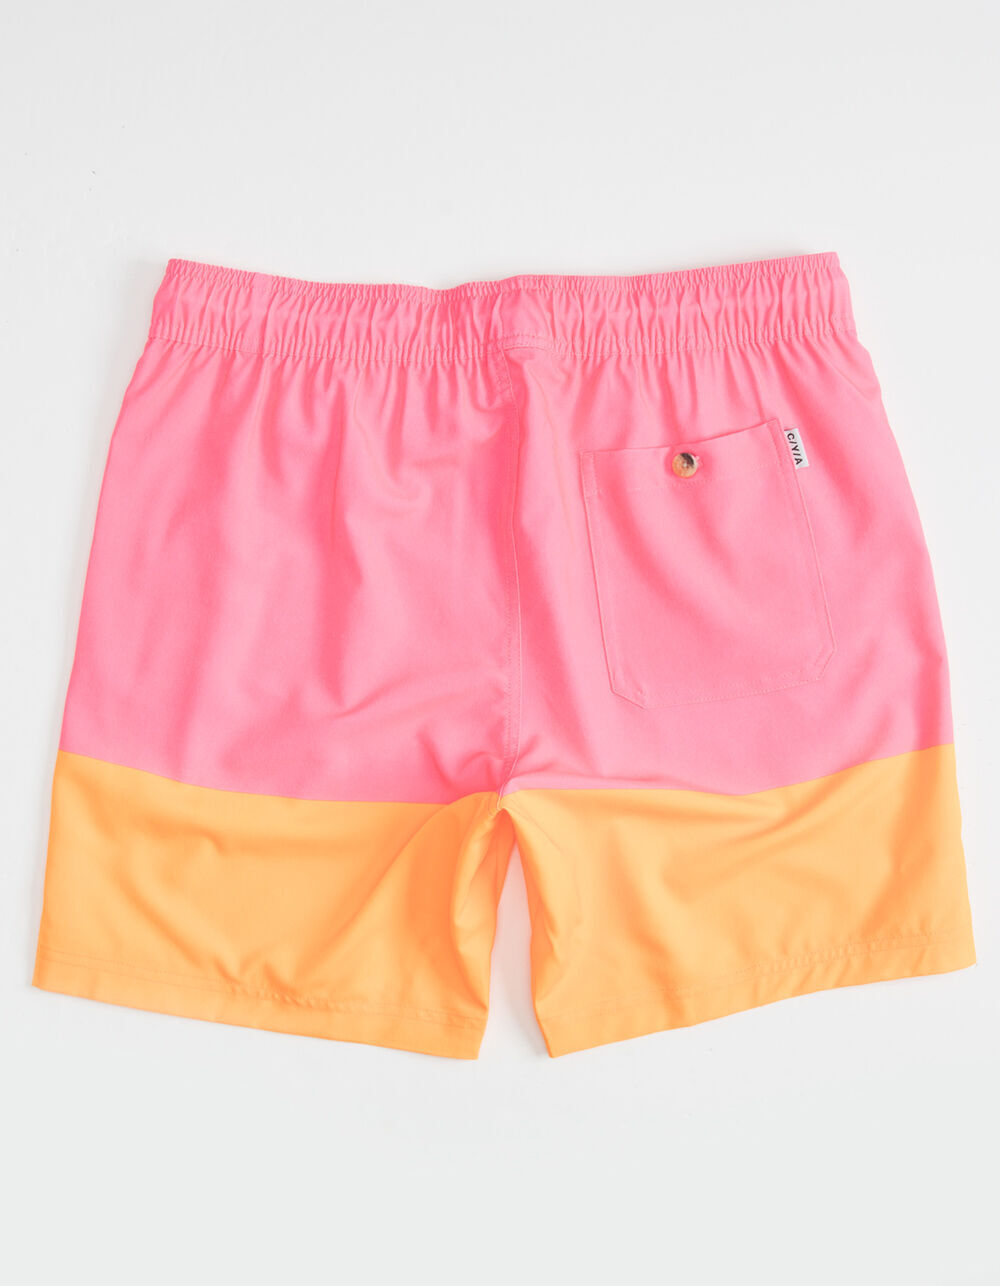 CYA Halferson Mens Neon Hot Pink Volley Shorts - NEON HOT PINK | Tillys